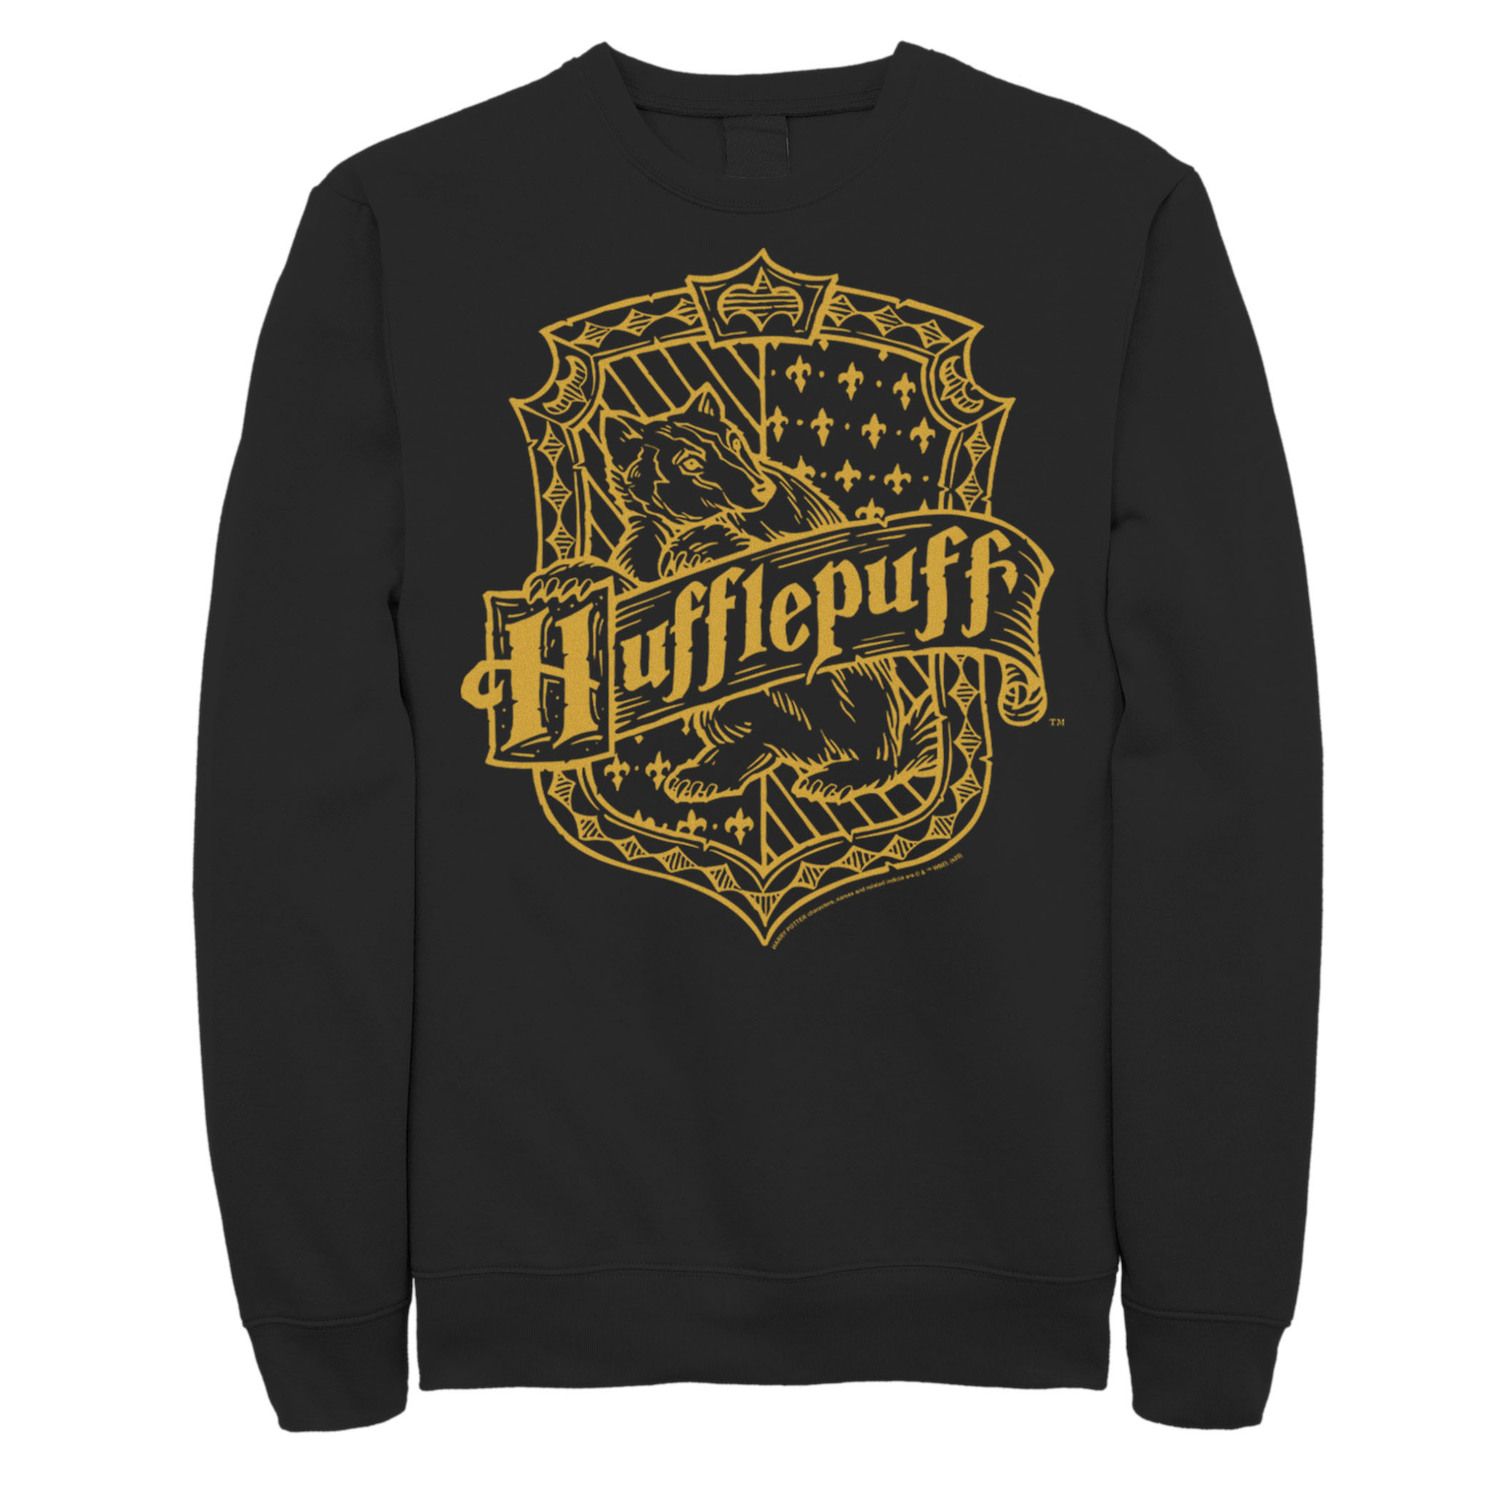 Image for Harry Potter Men's Hufflepuff Dark Detailed Crest Sweatshirt at Kohl's.